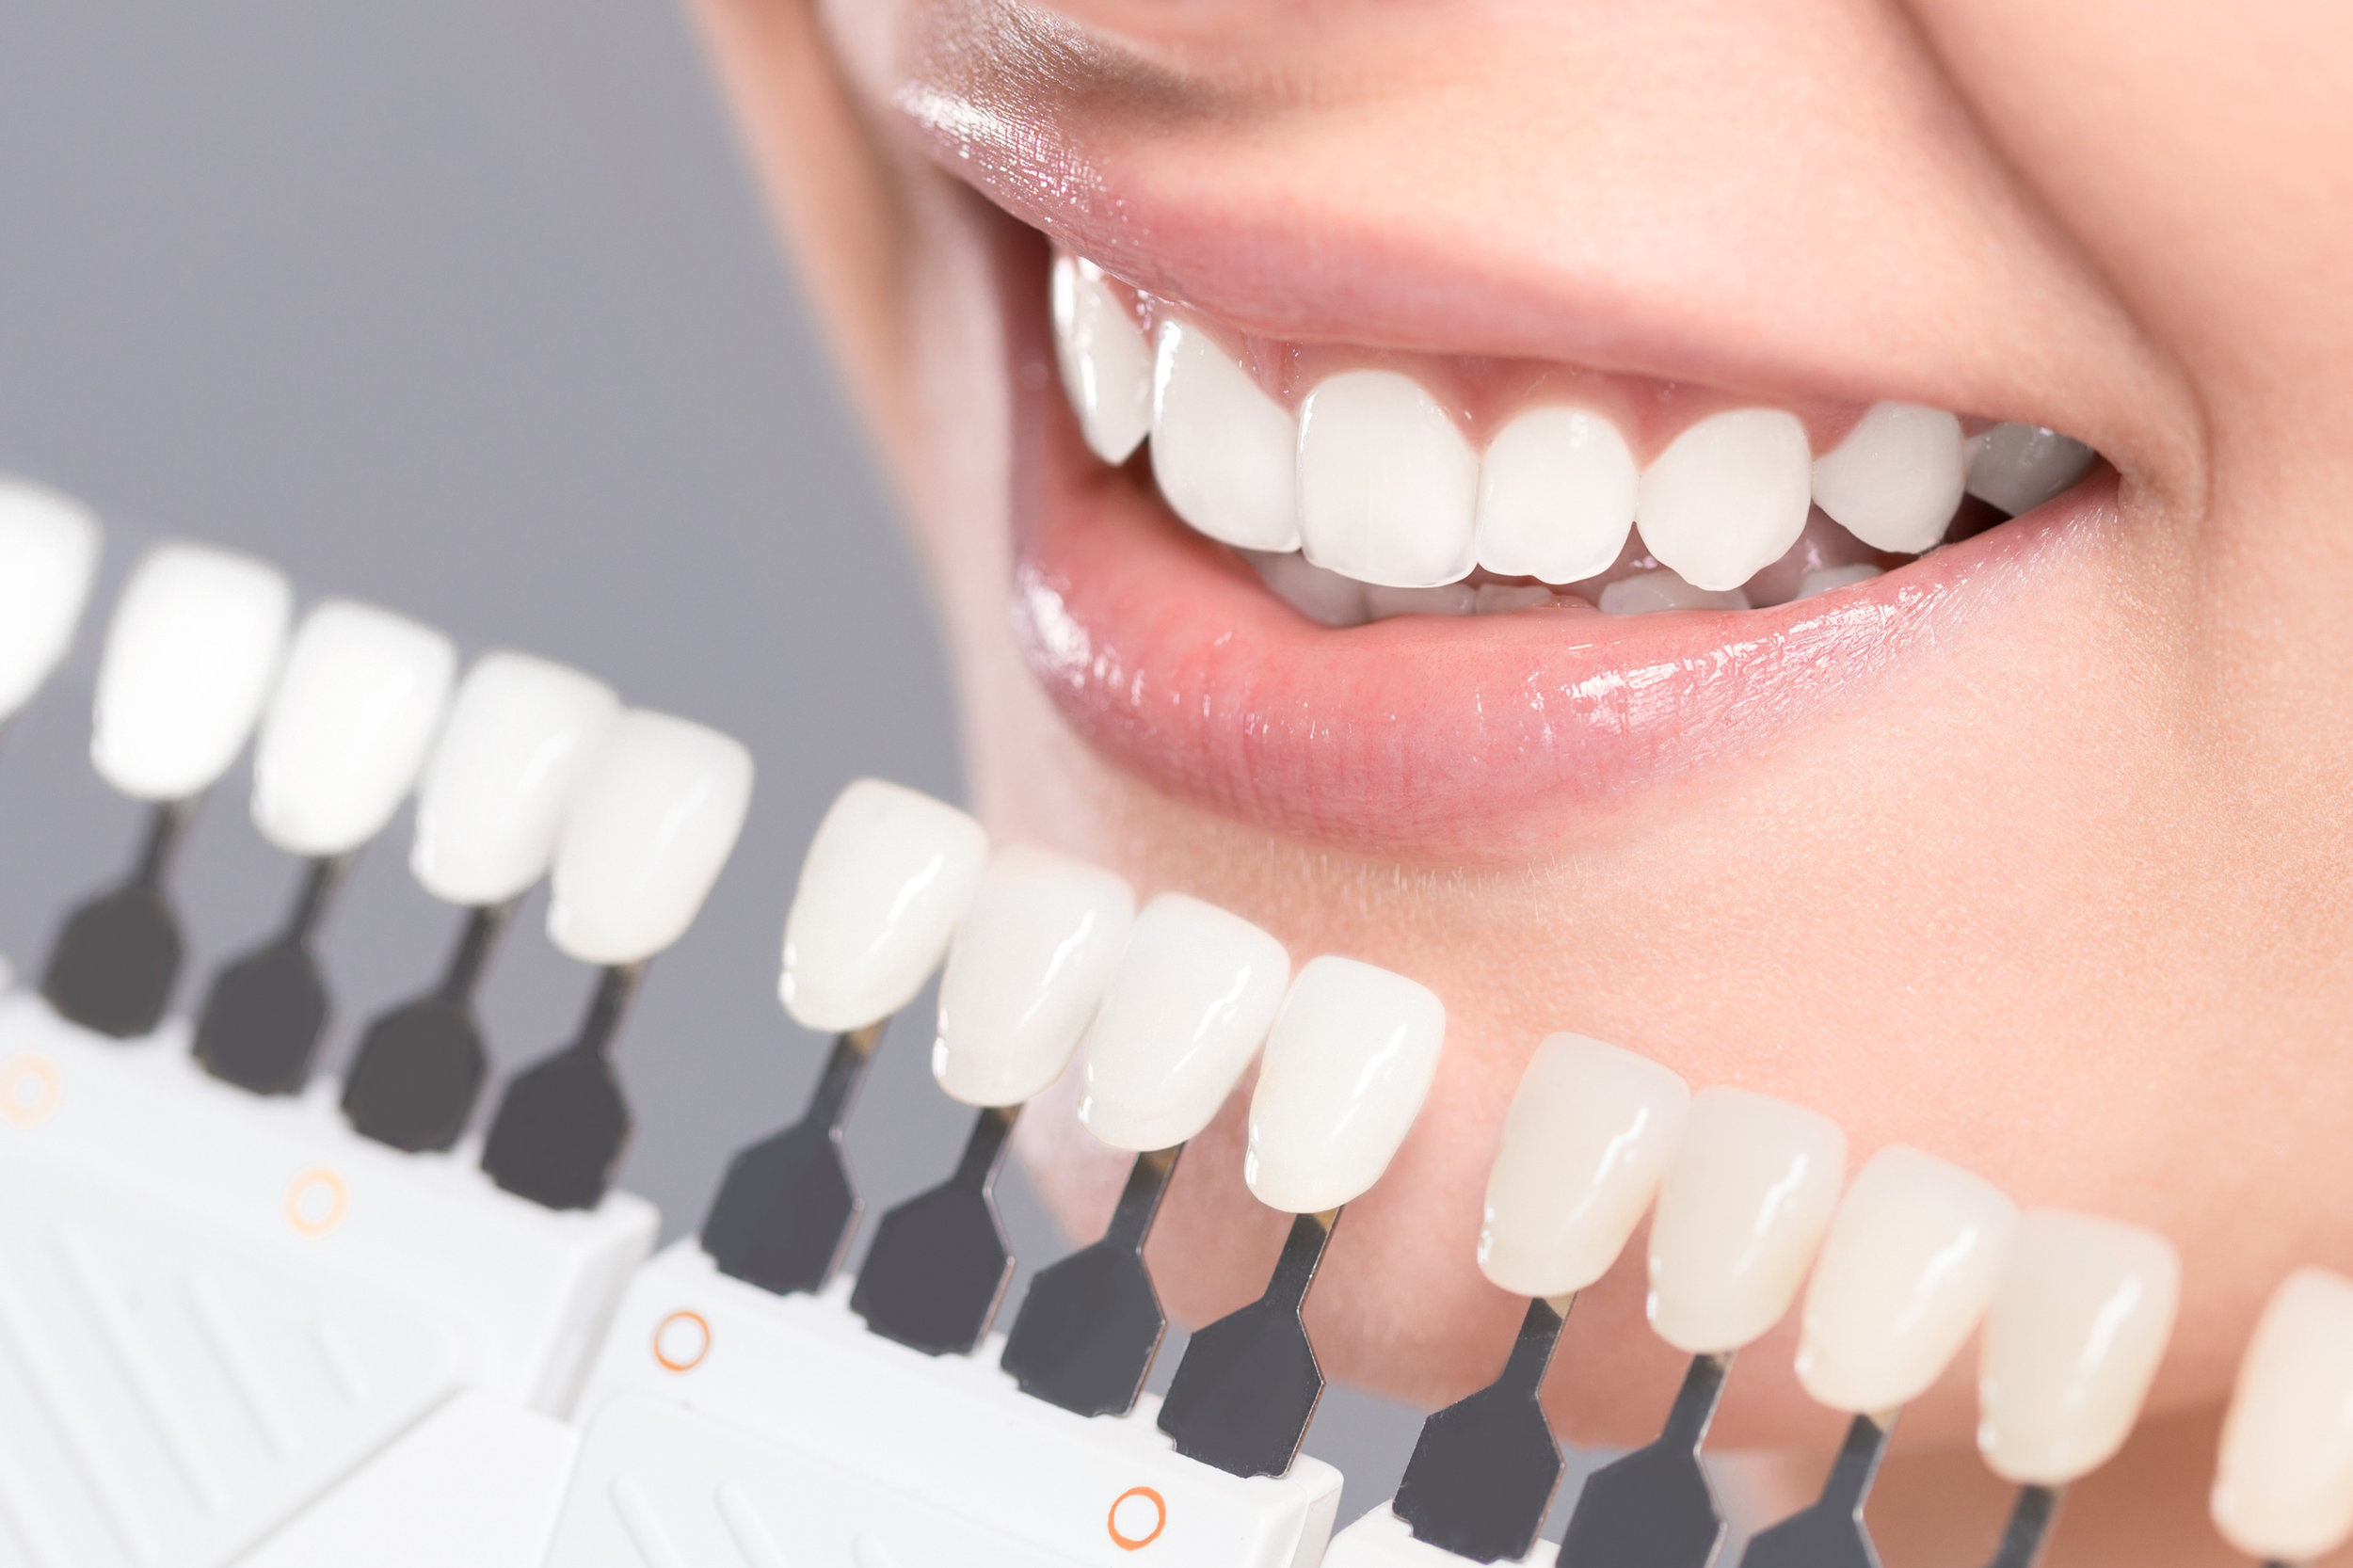 Teeth Whitening Shades Chart